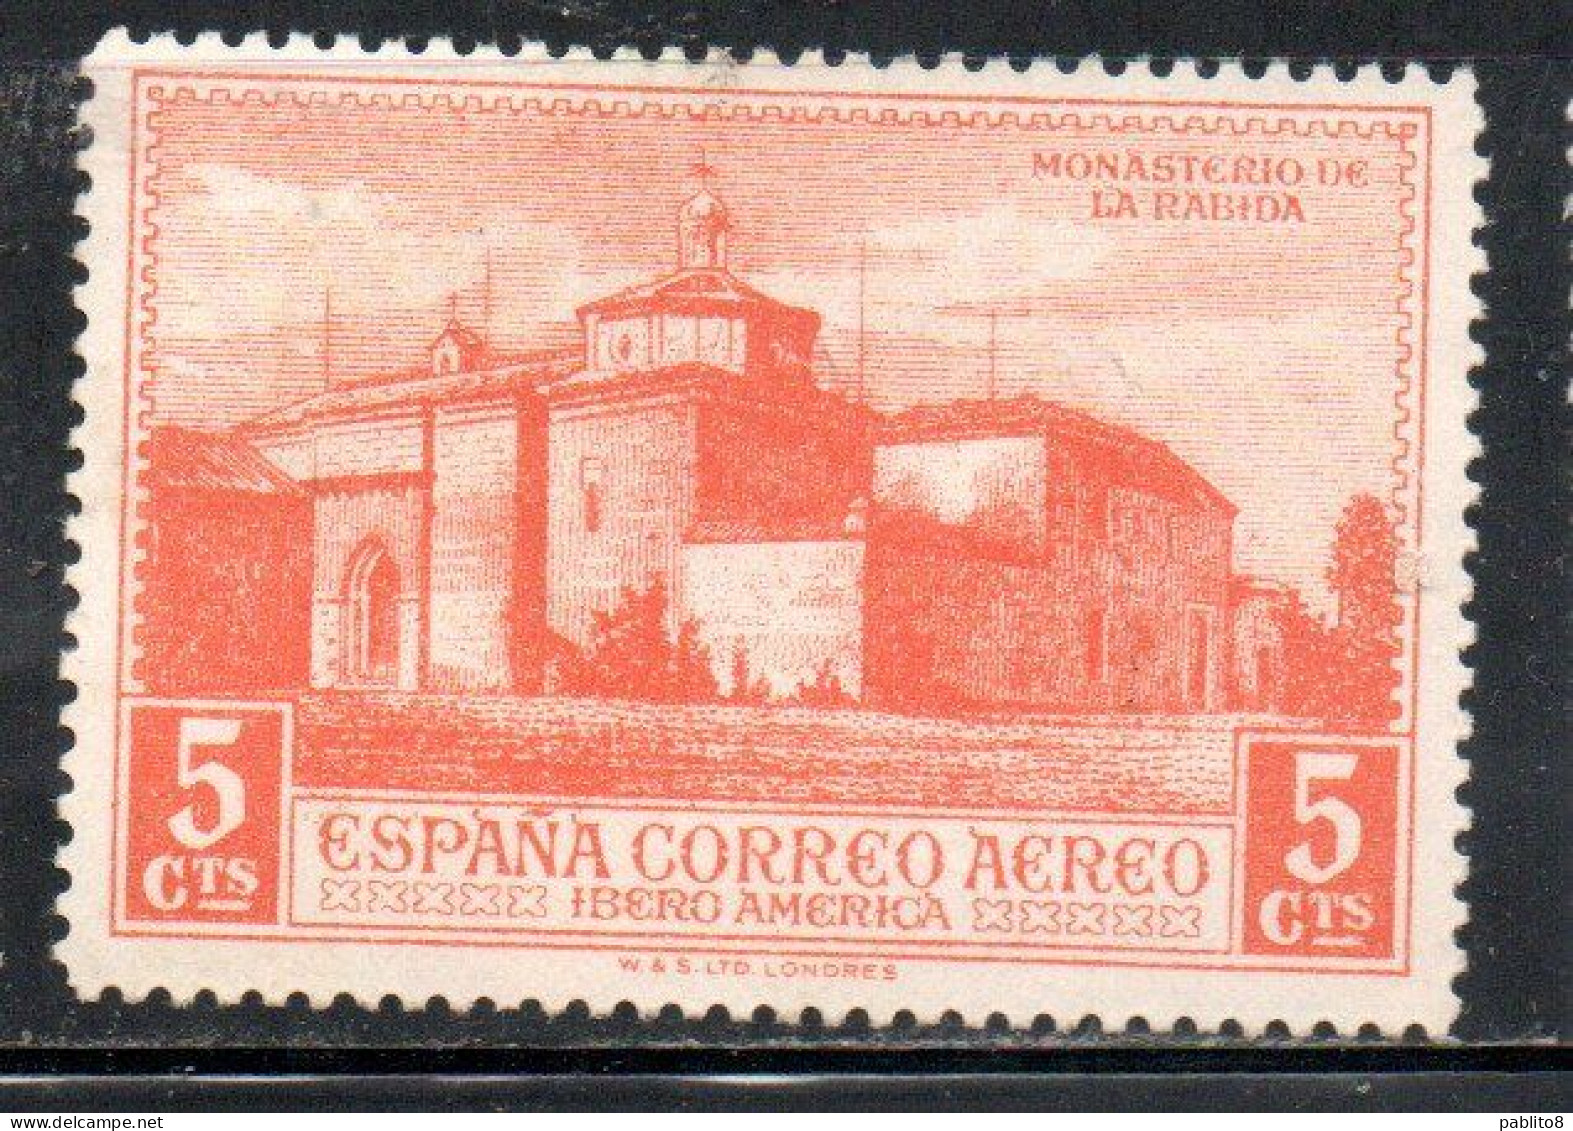 SPAIN ESPAÑA SPAGNA 1930 AIR POST MAIL AIRMAIL CHRISTOPHER COLUMBUS ISSUE LA RABYDA MONASTER  5c MLH - Ungebraucht